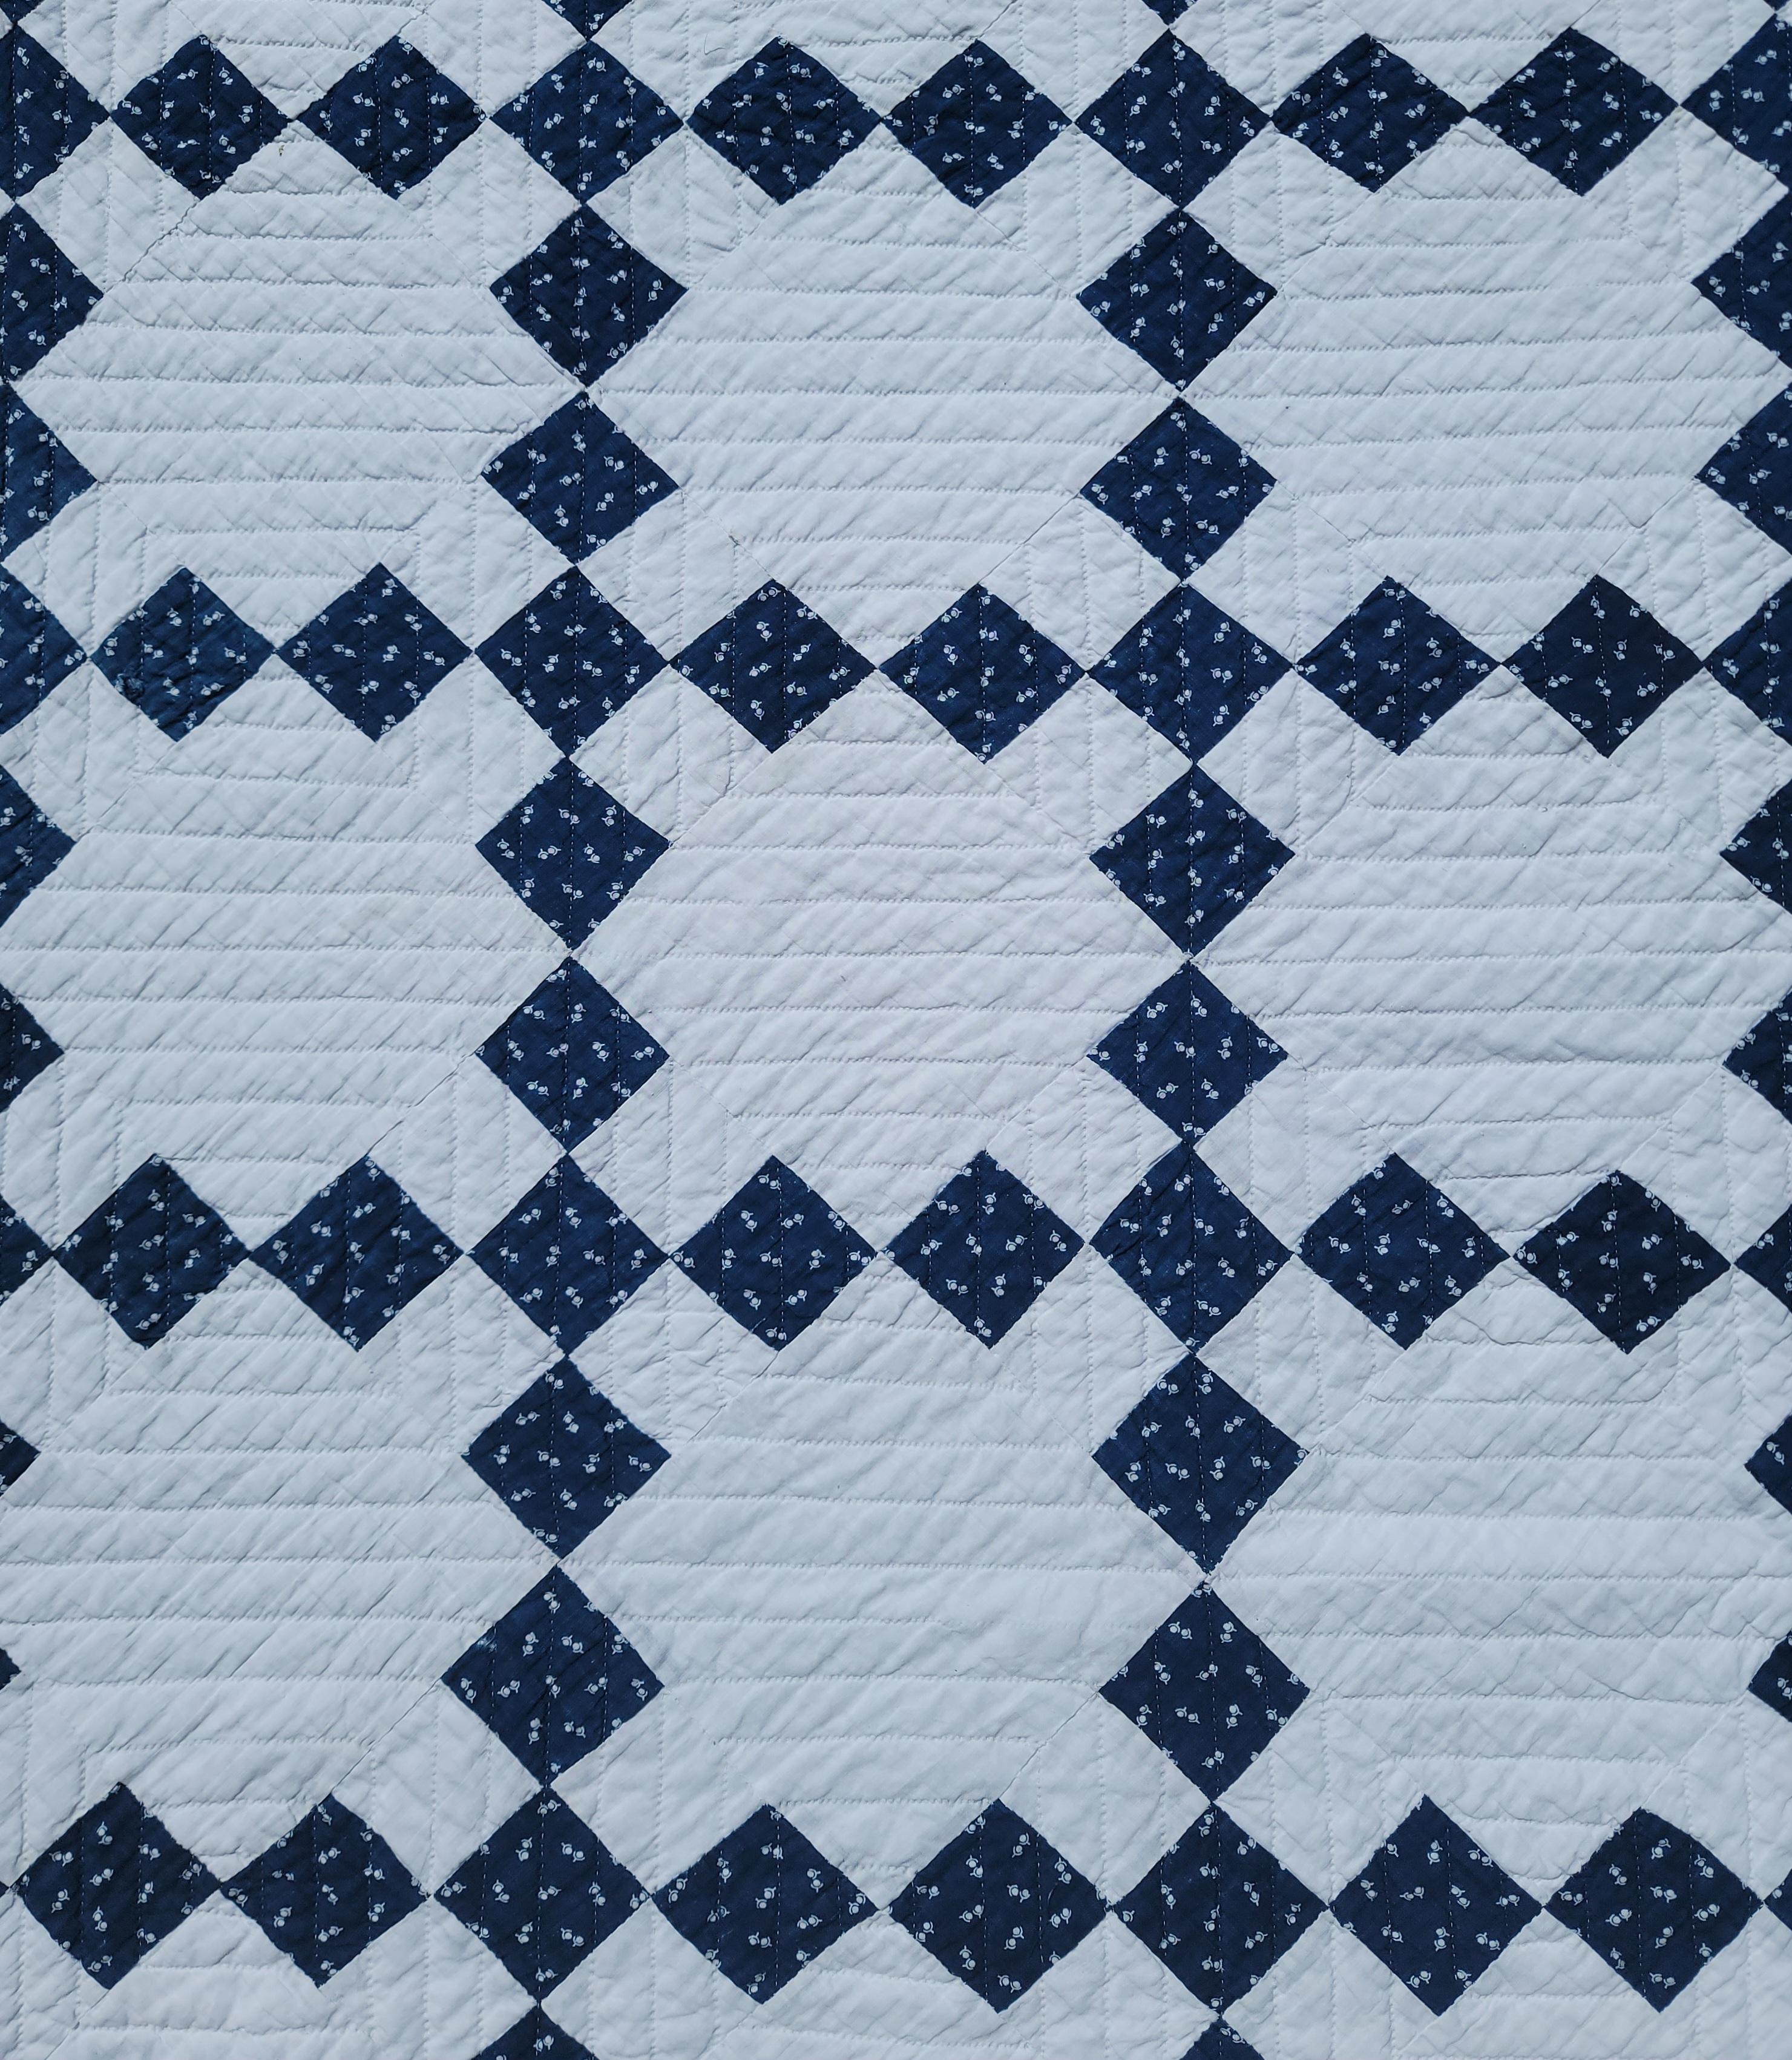 19Thc Irish chain blue & white quilt in pristine condition. This quilt was found in Pennsylvania.